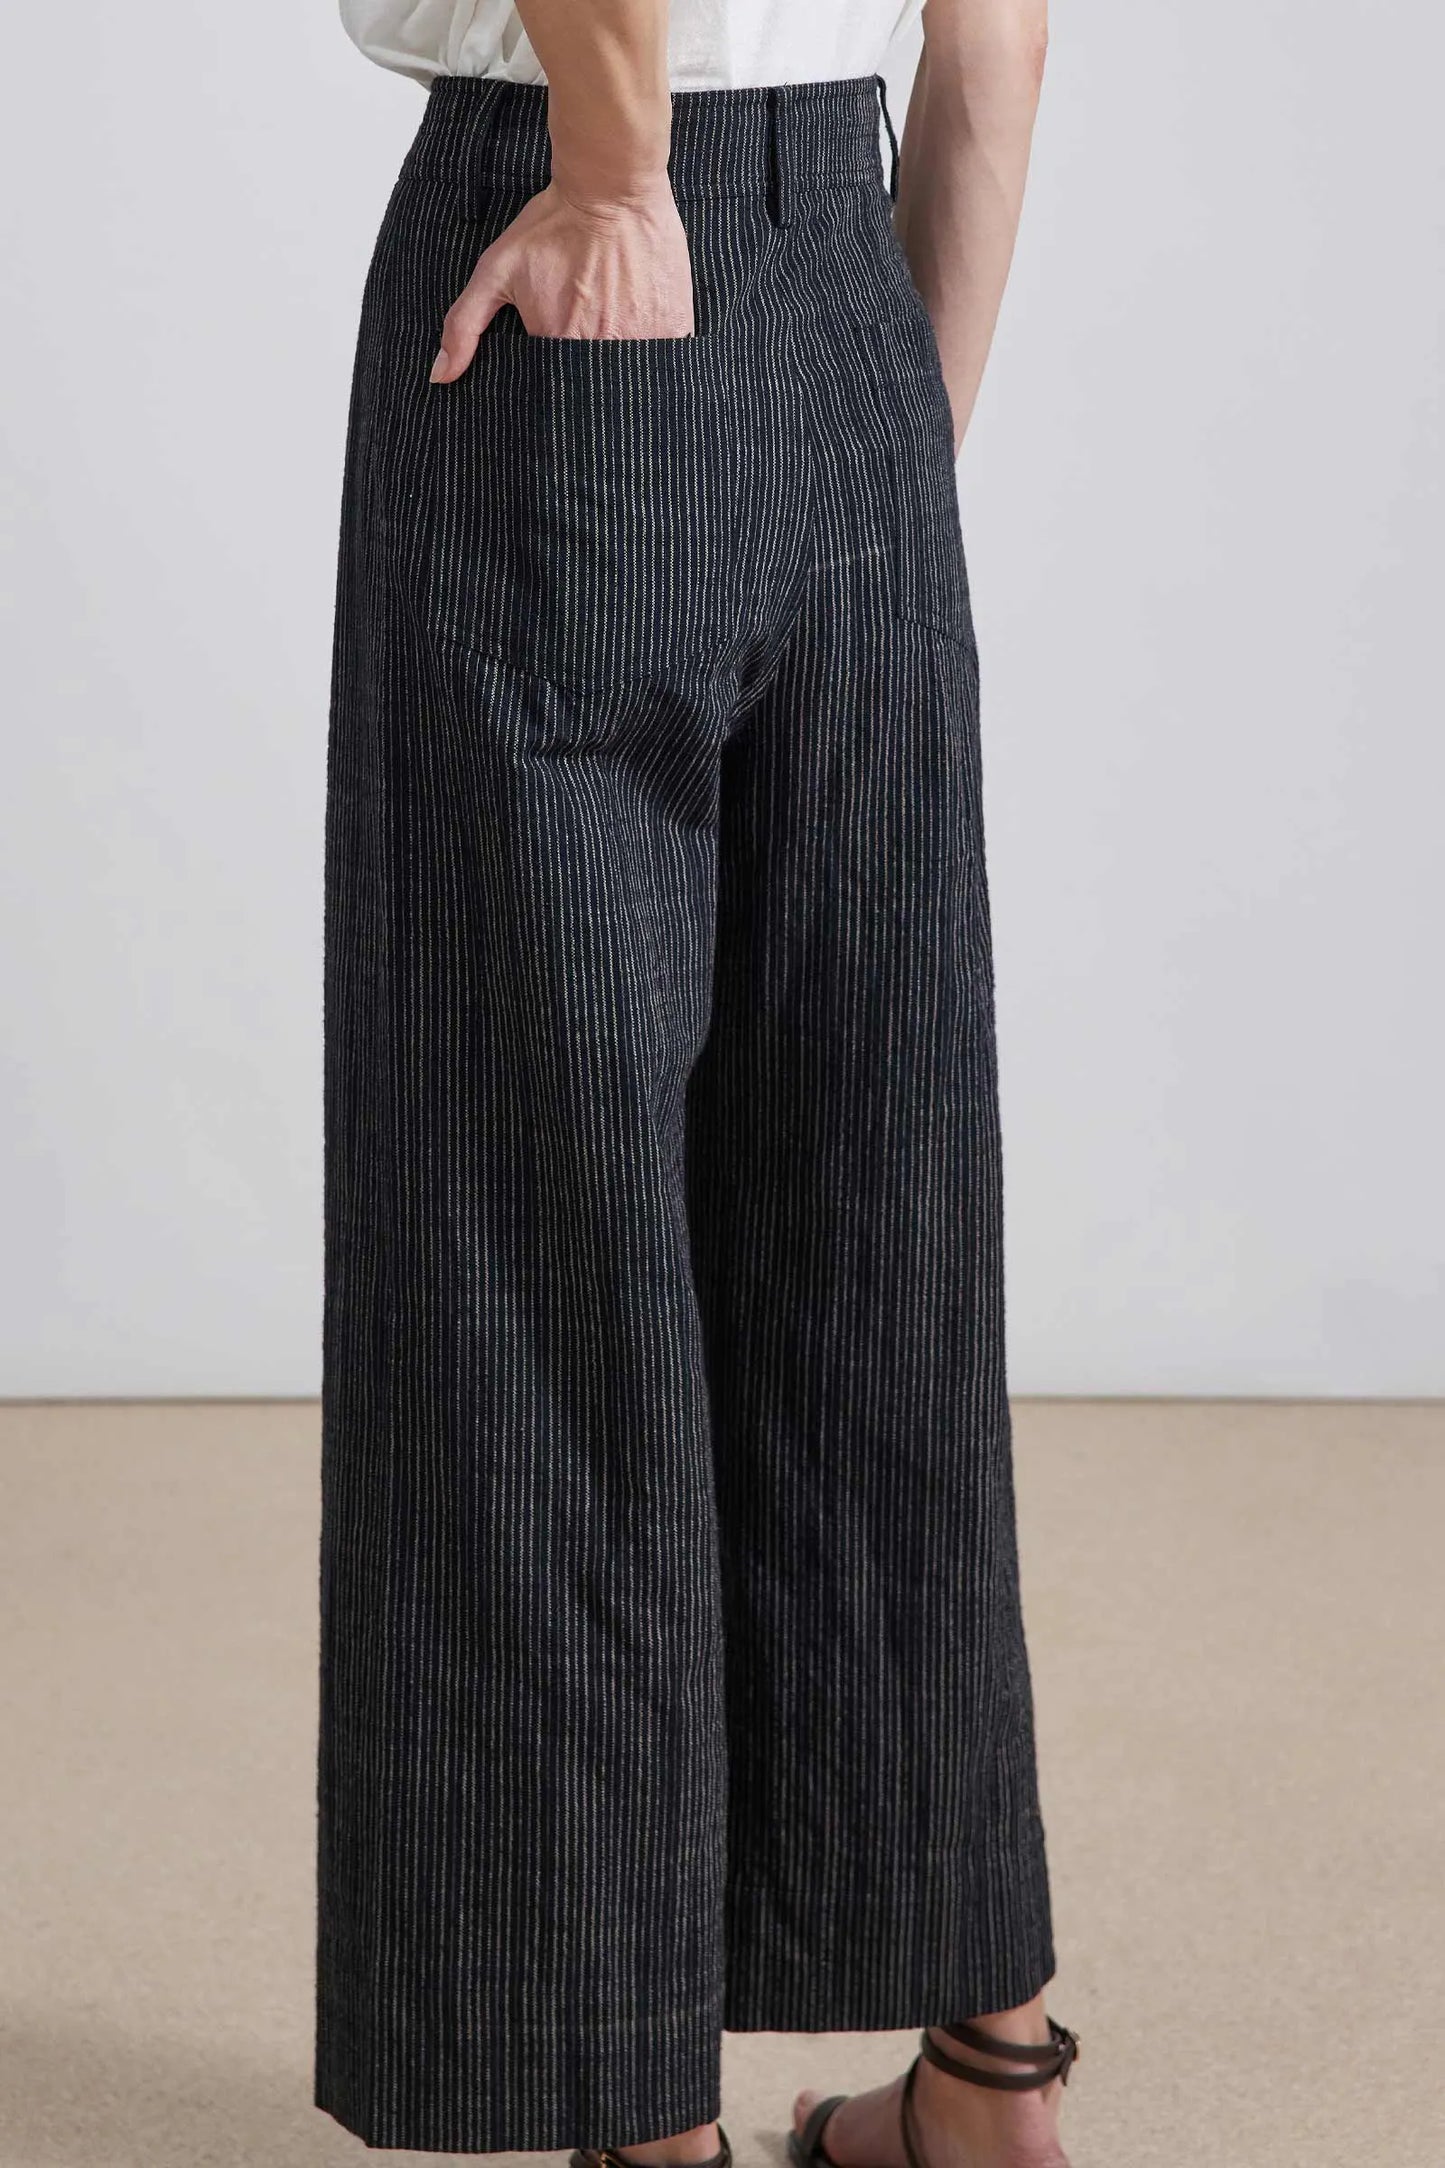 AA Pin Stripe Elsa Blazer, Meridian Pant & Bari Crop Set